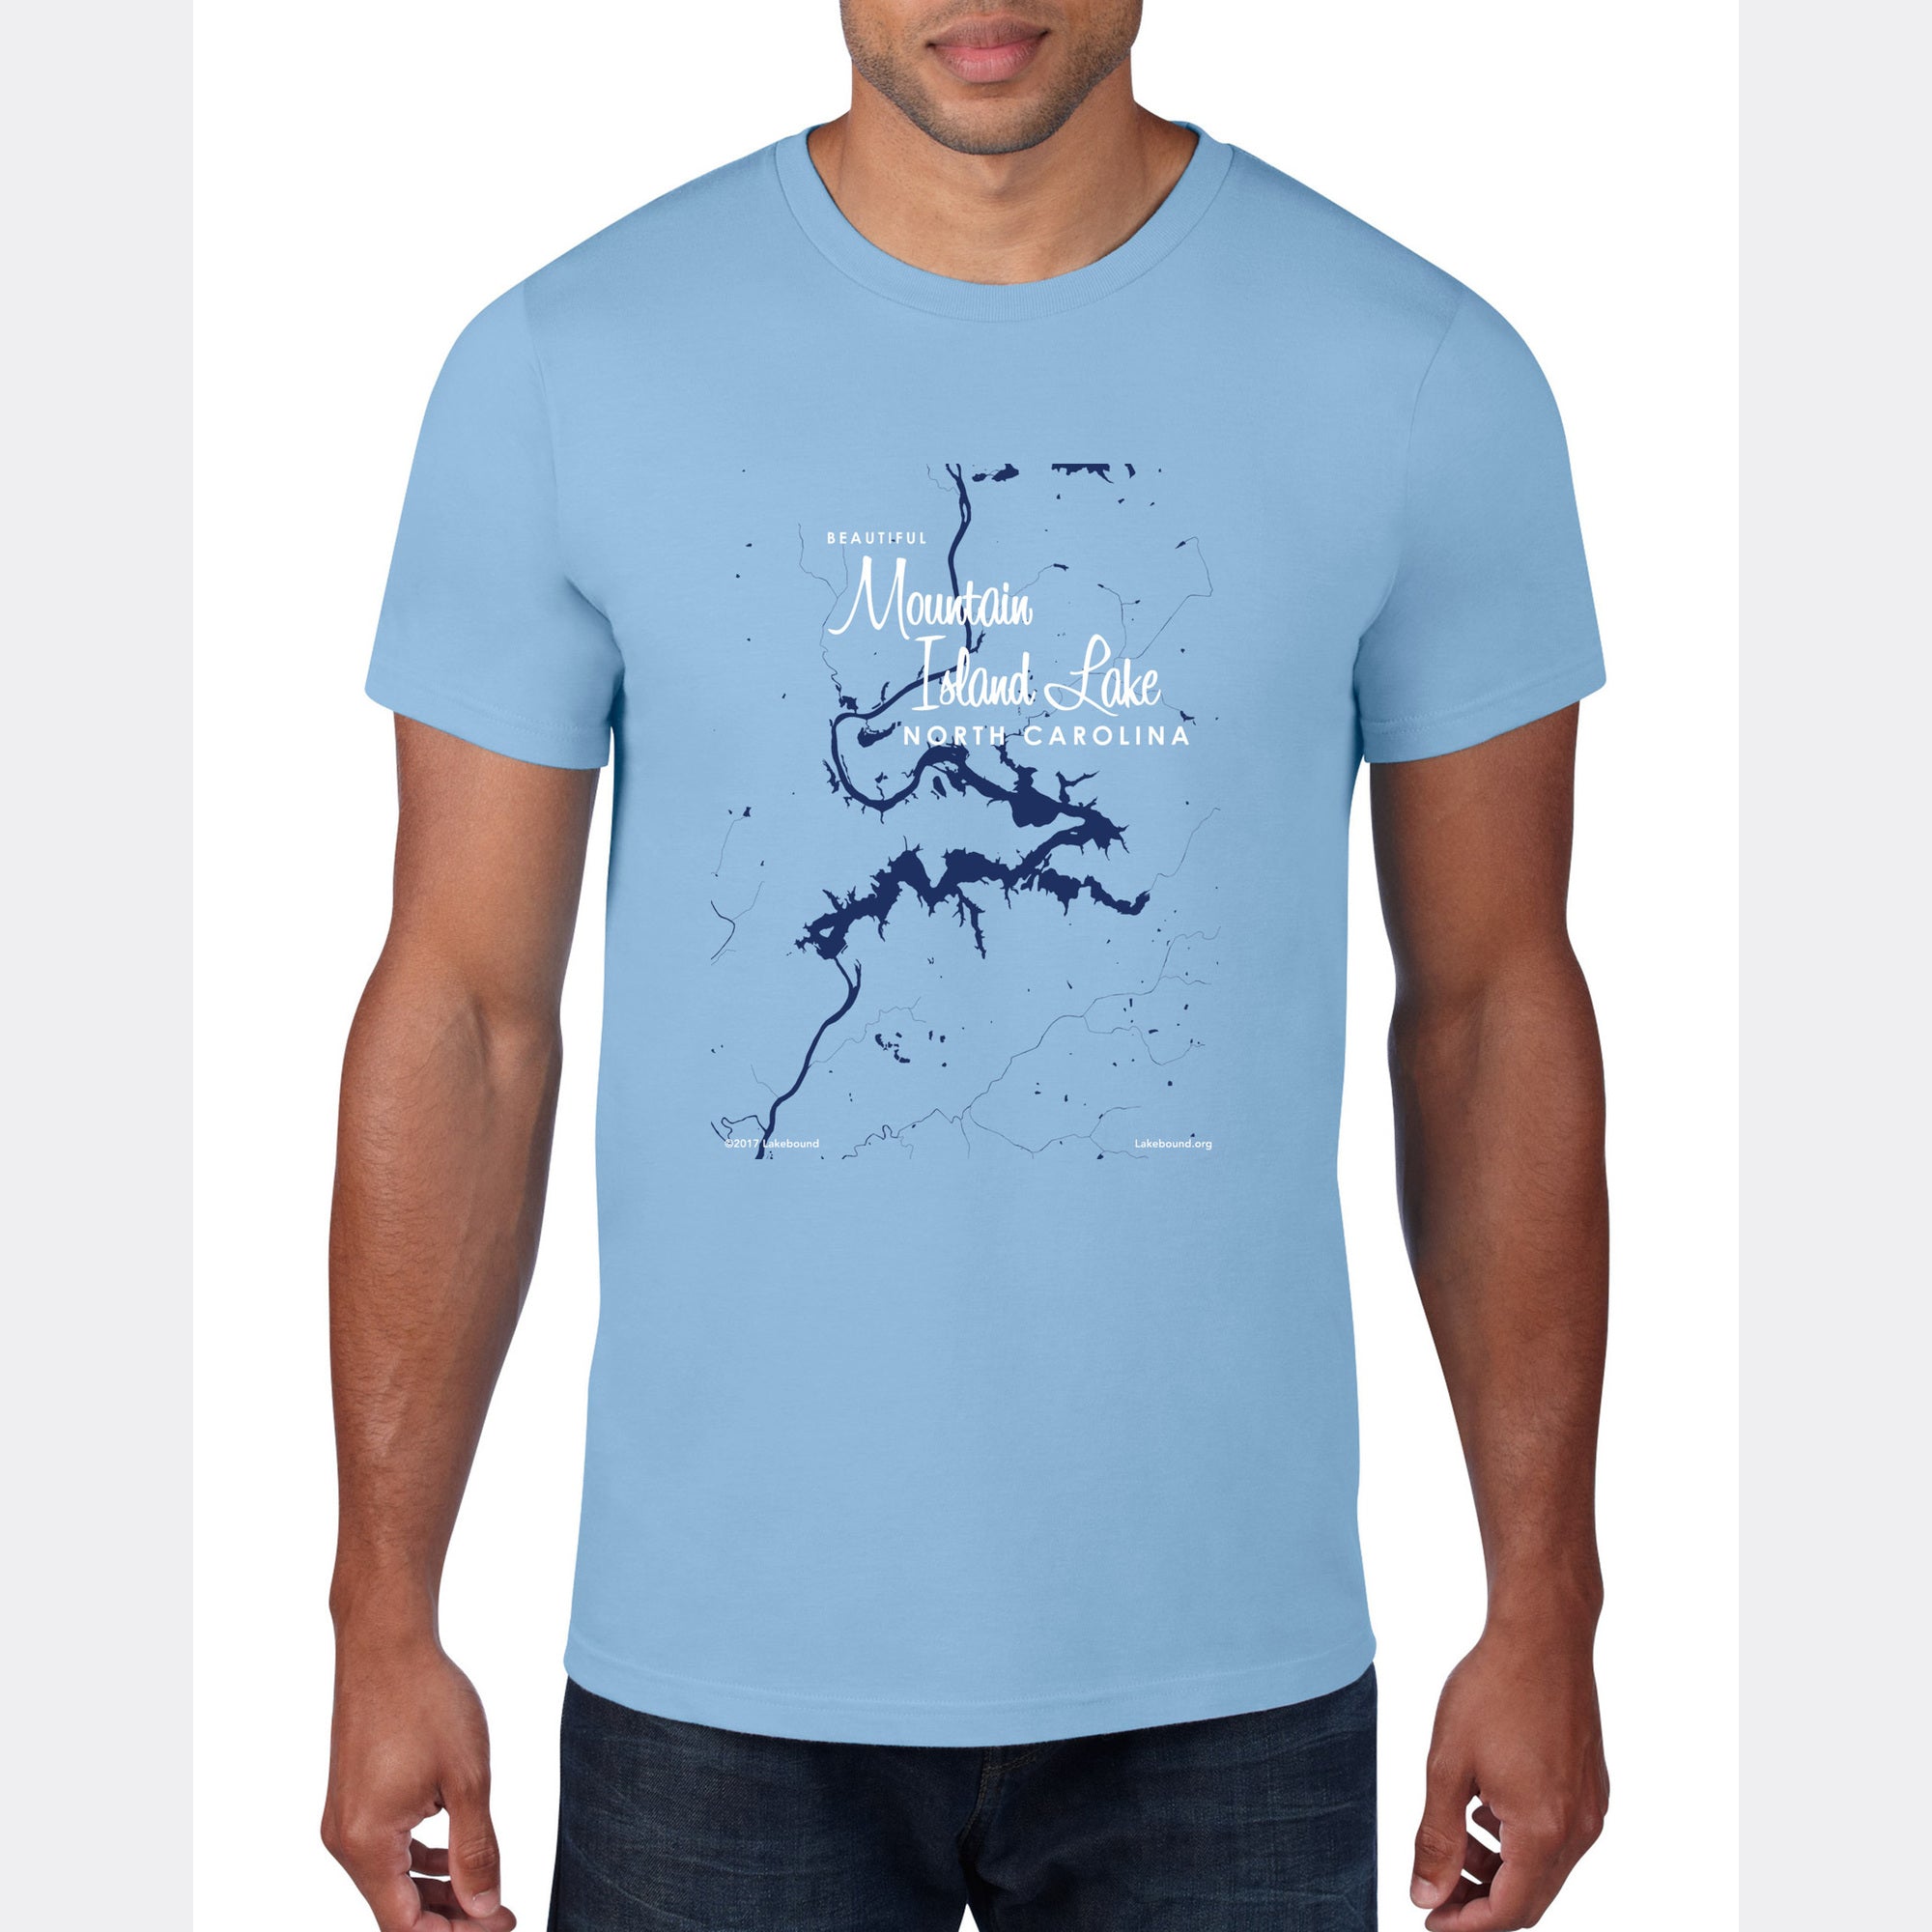 Mountain Island Lake North Carolina, T-Shirt